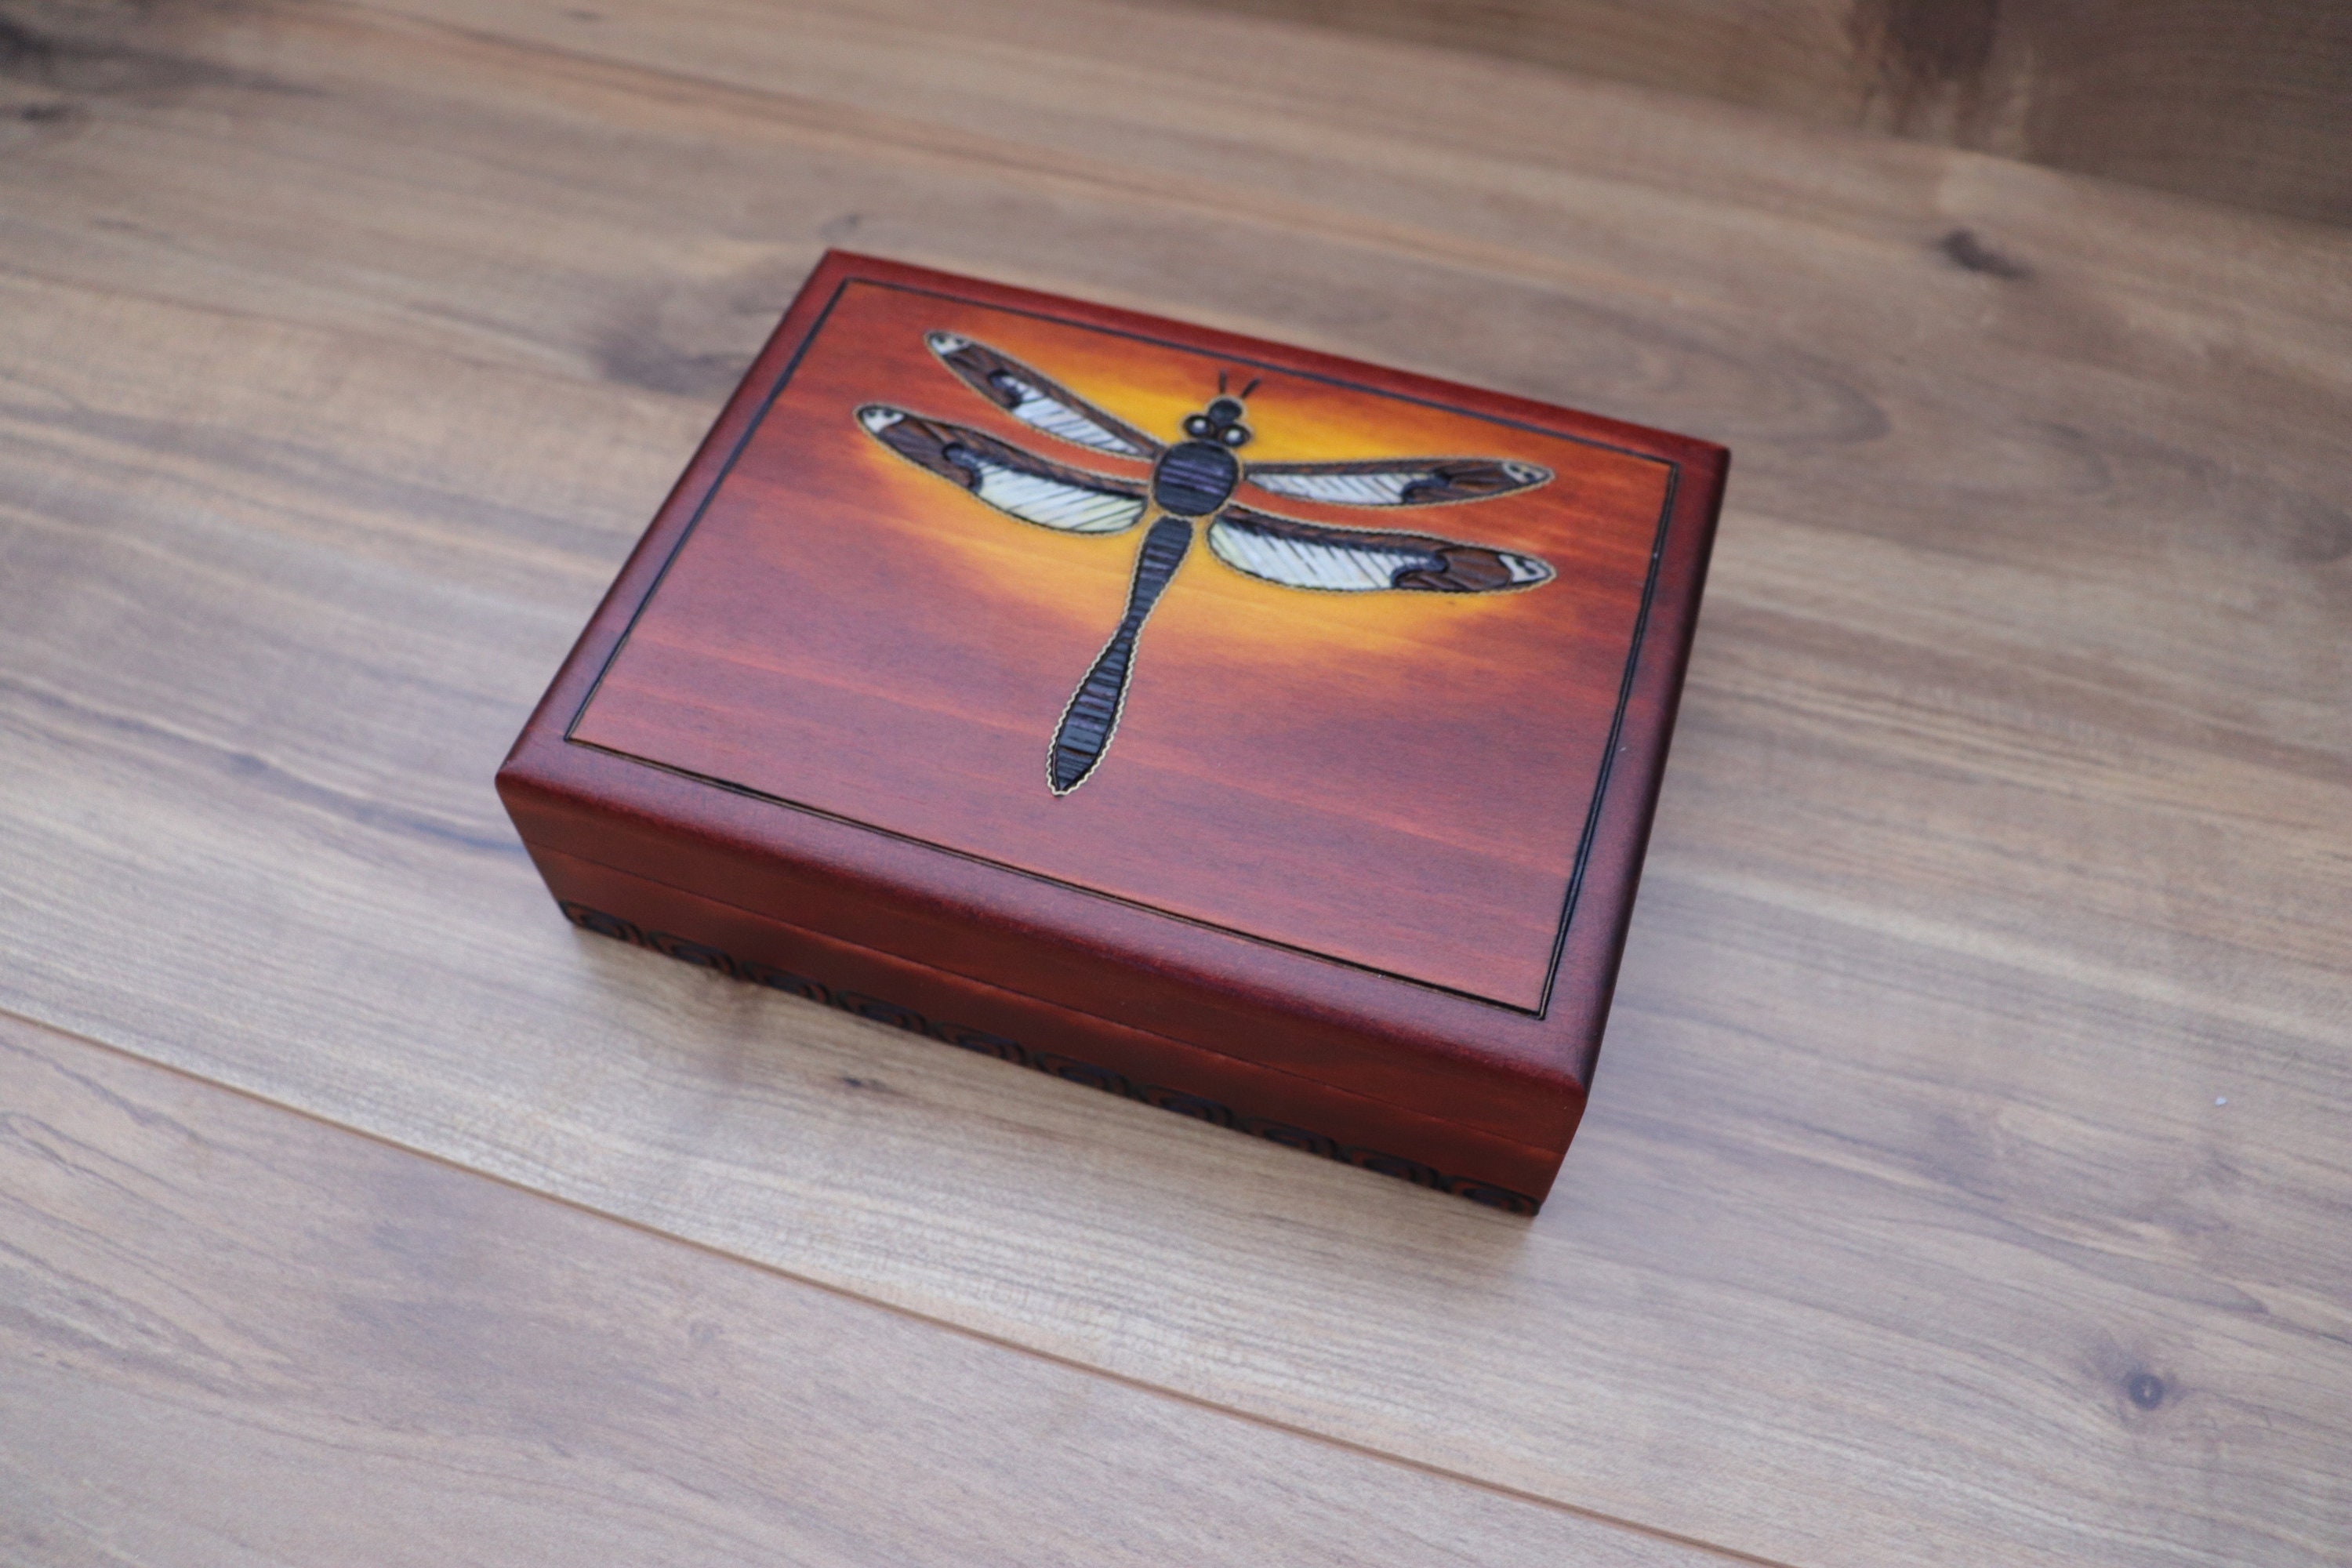 Dragonfly Wood Box Puzzle Handmade Keepsake Jewelry Trinket Decorative Box 